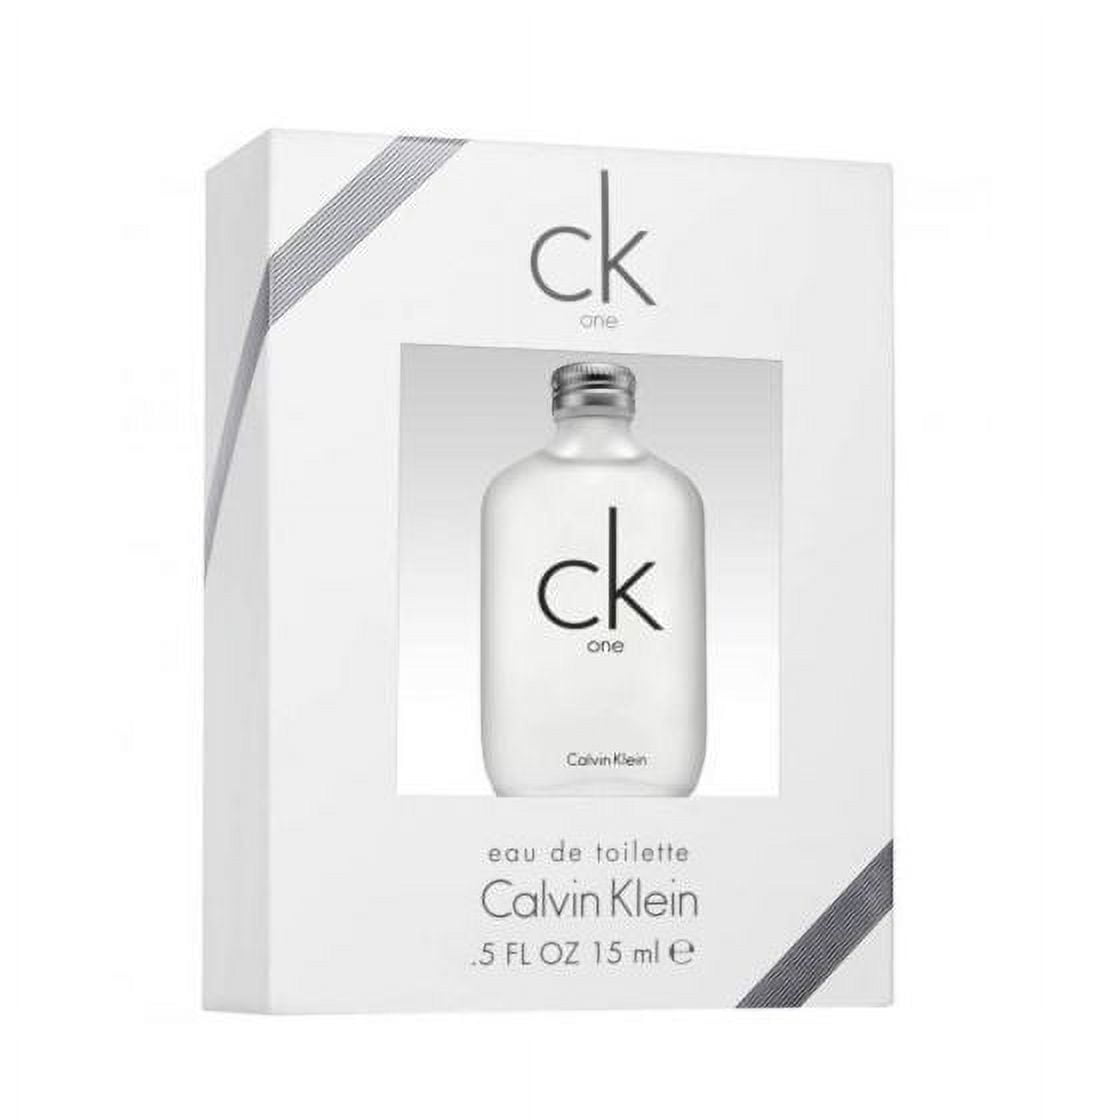 Ck One By Calvin Klein Eau De Toilette 0.5 oz / 15 ML Splash - Walmart.com